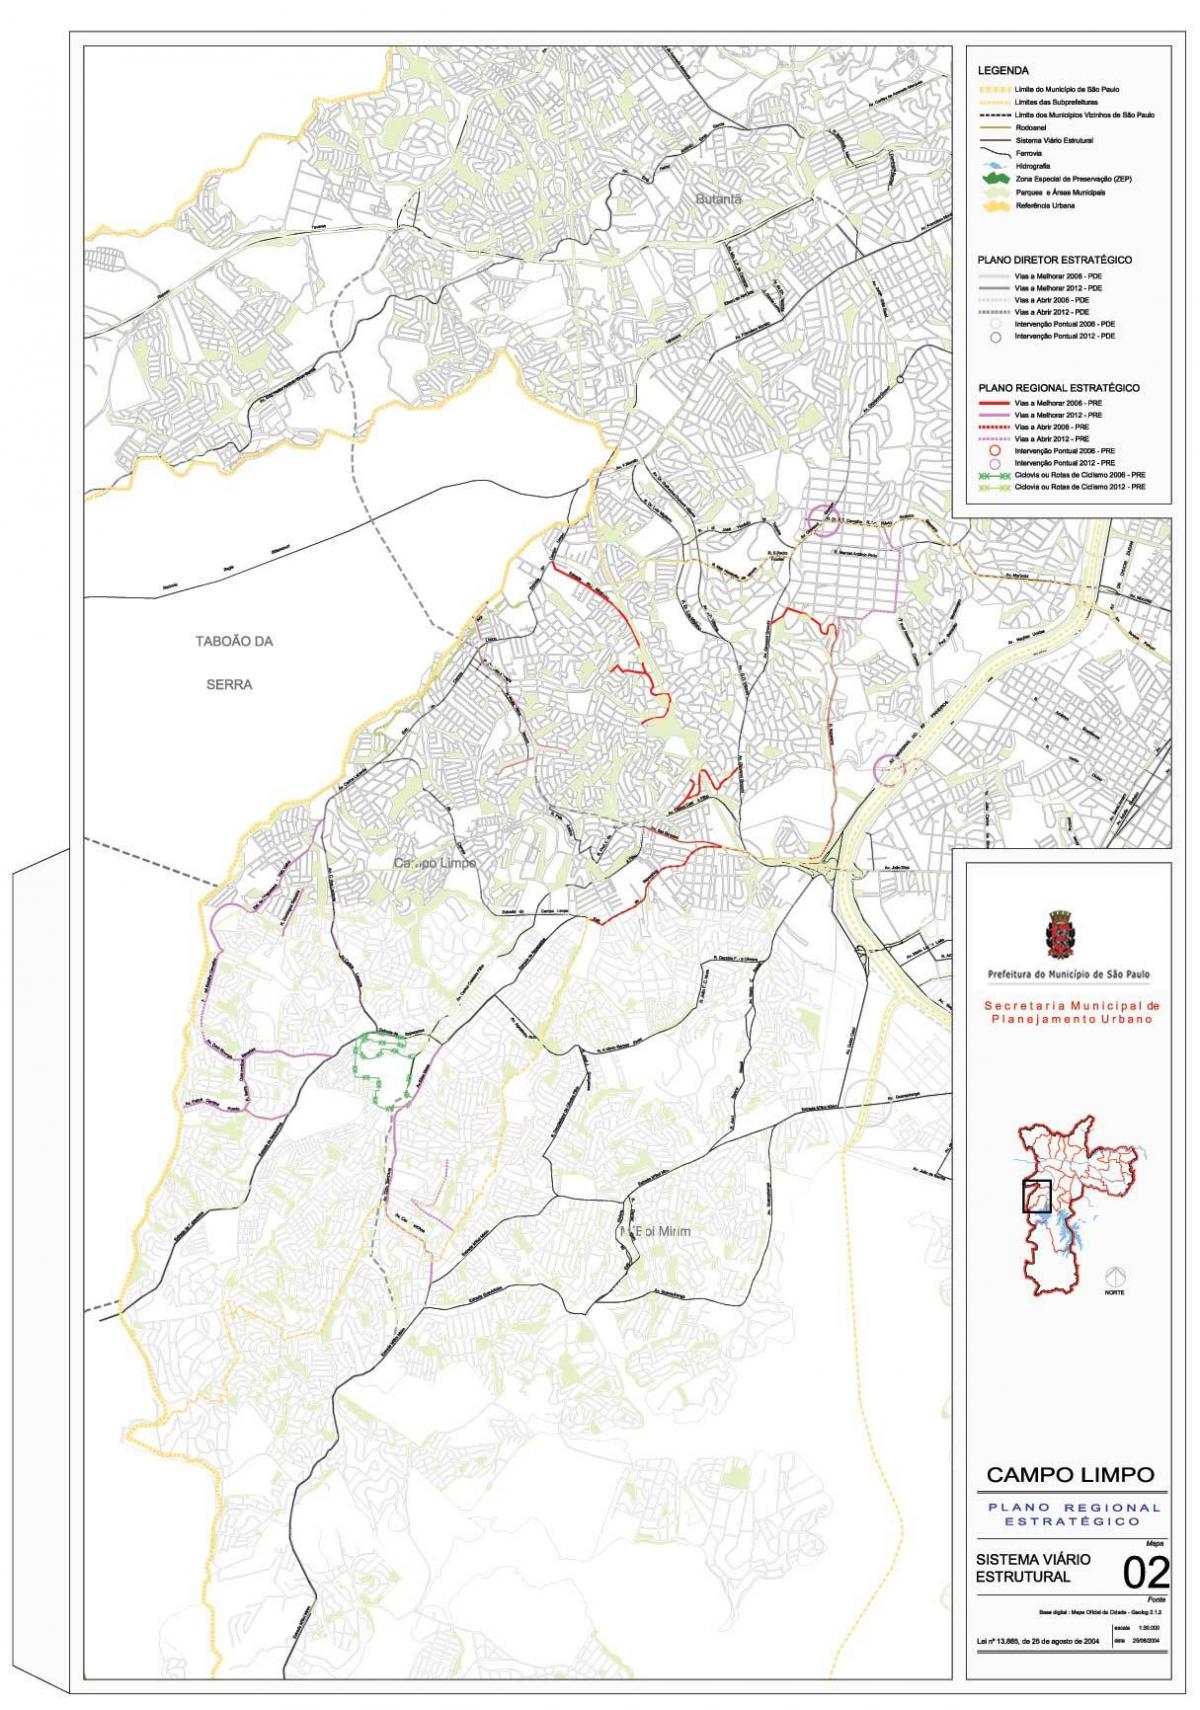 Kaart van Campo Limpo São Paulo - Paaie